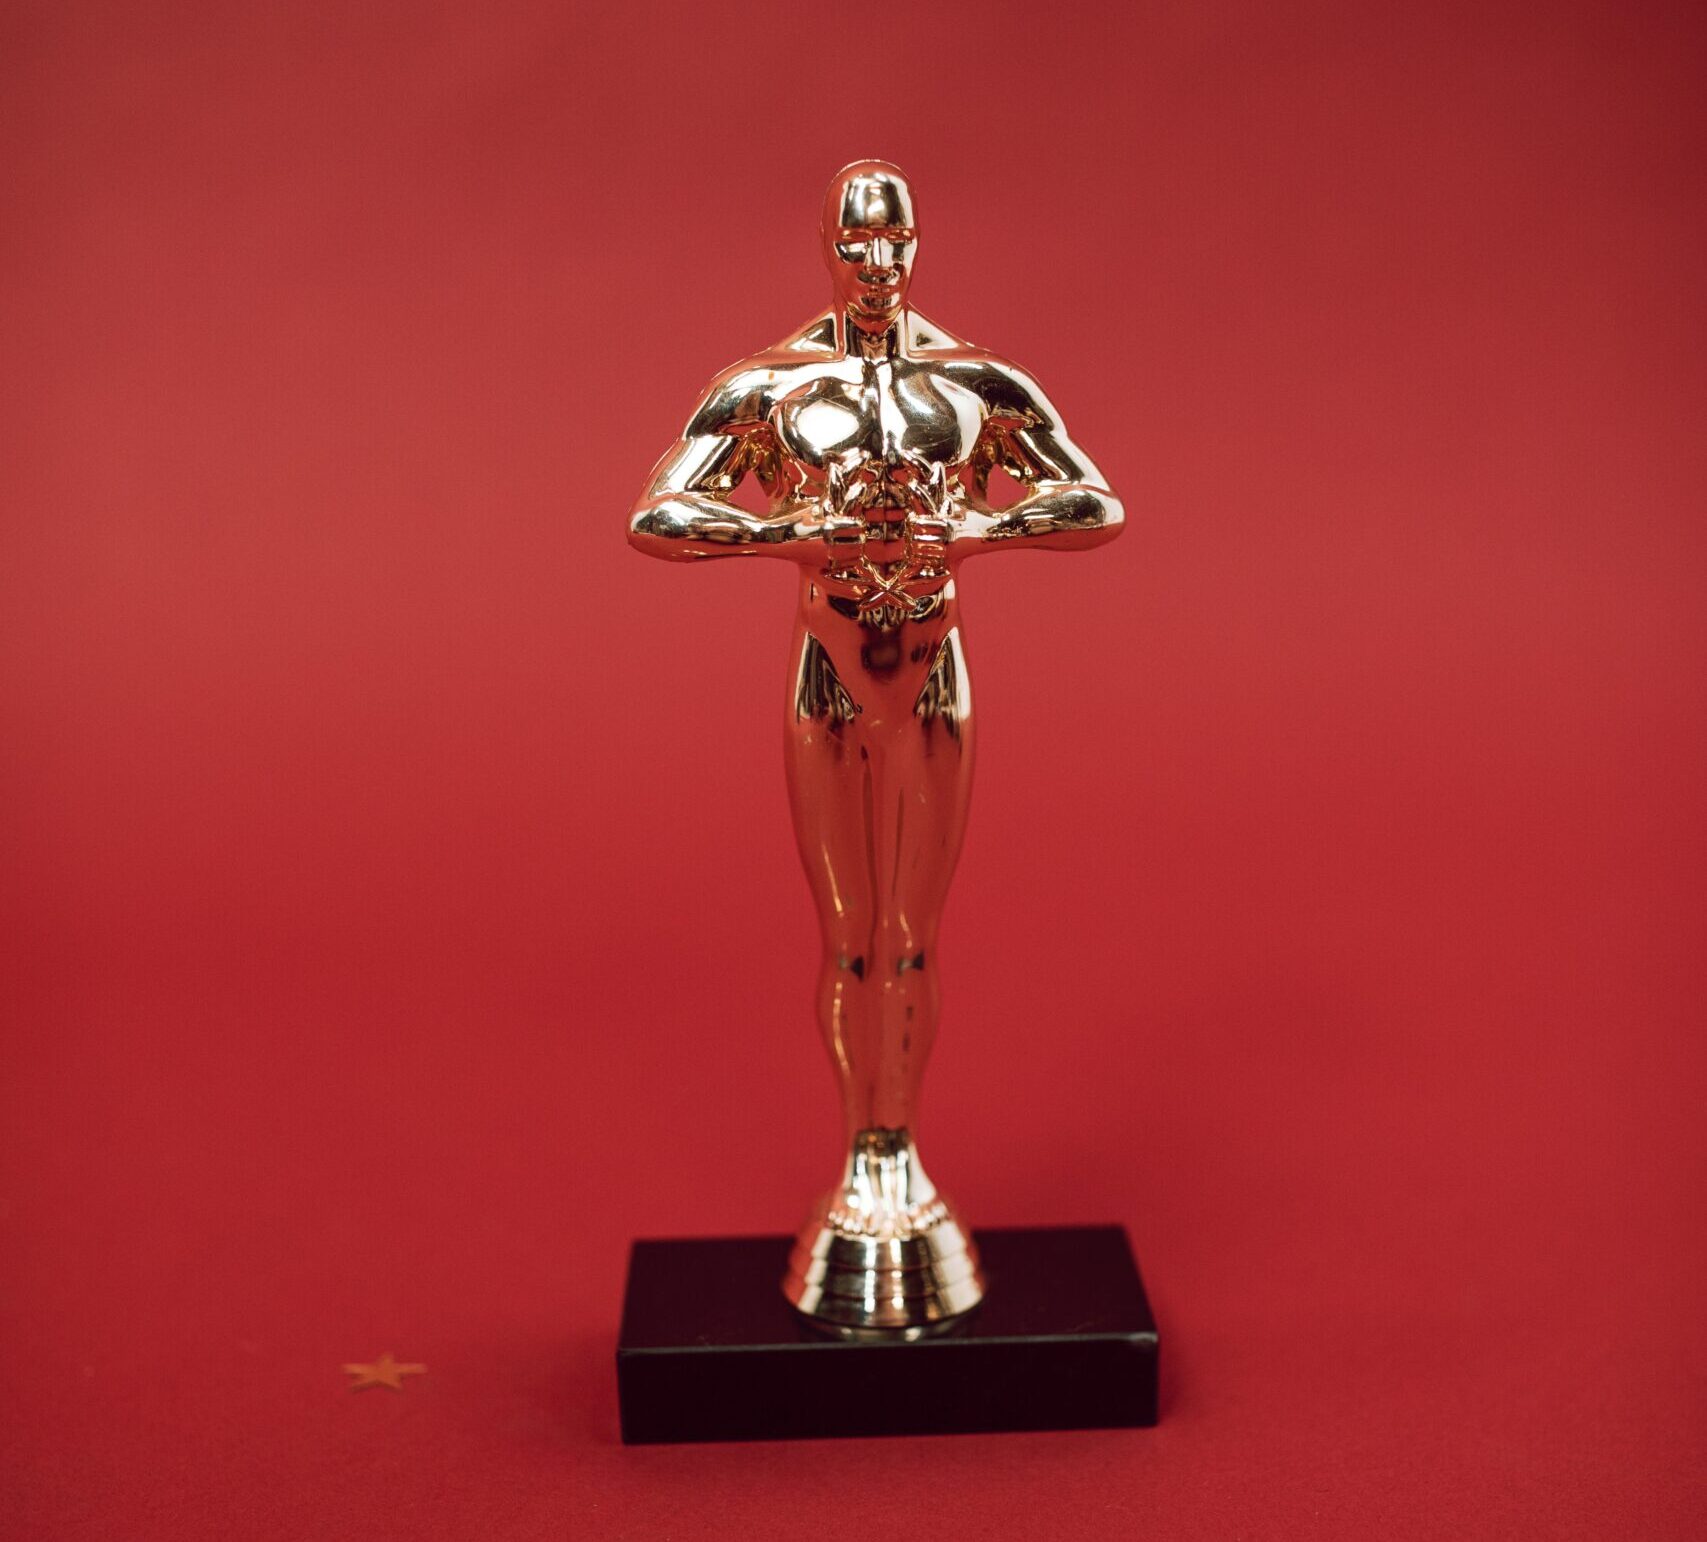 (Oscars Image: Pexels.com)